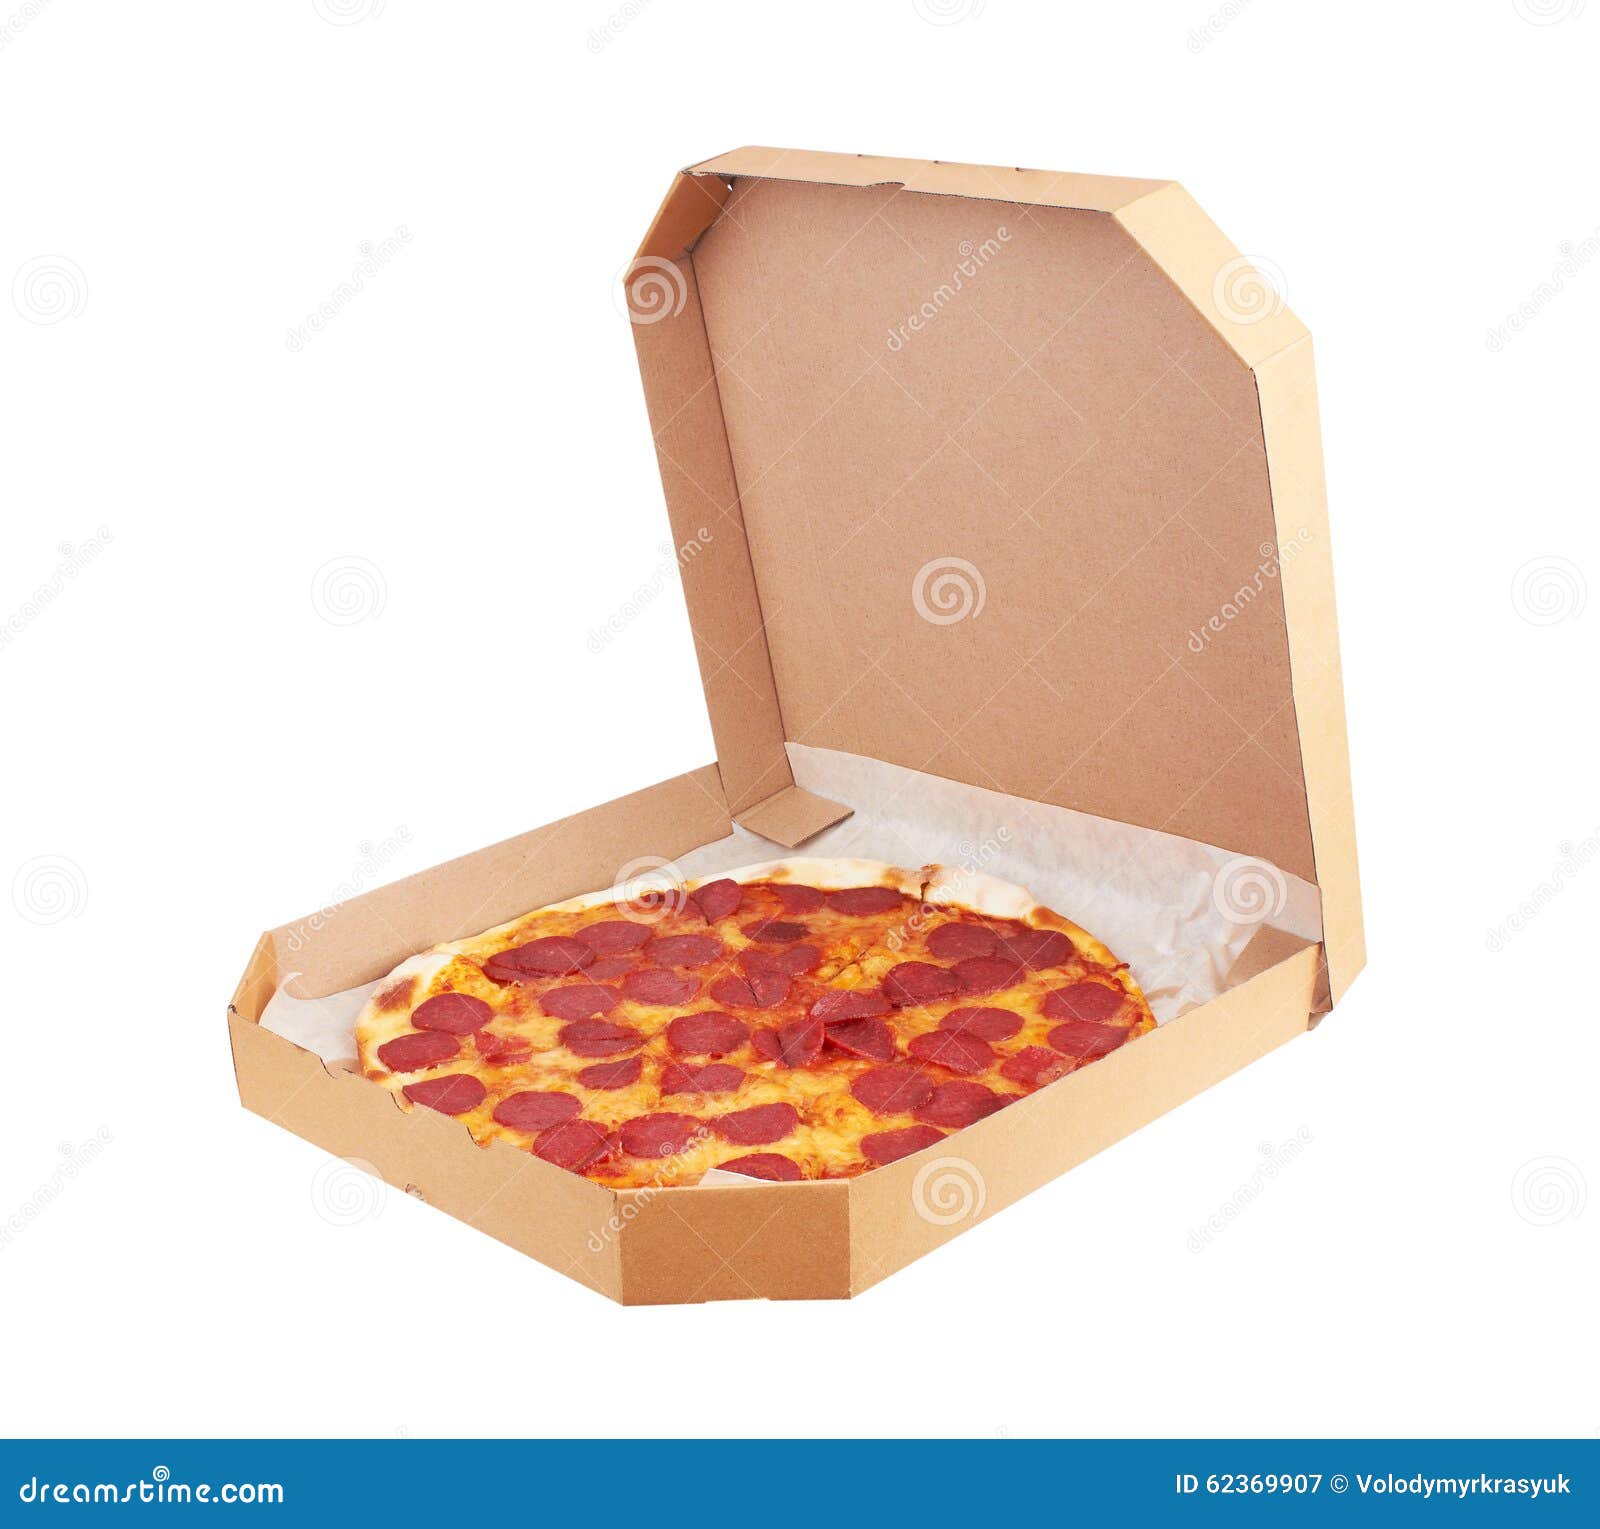 фото пиццы пепперони в коробке фото 85